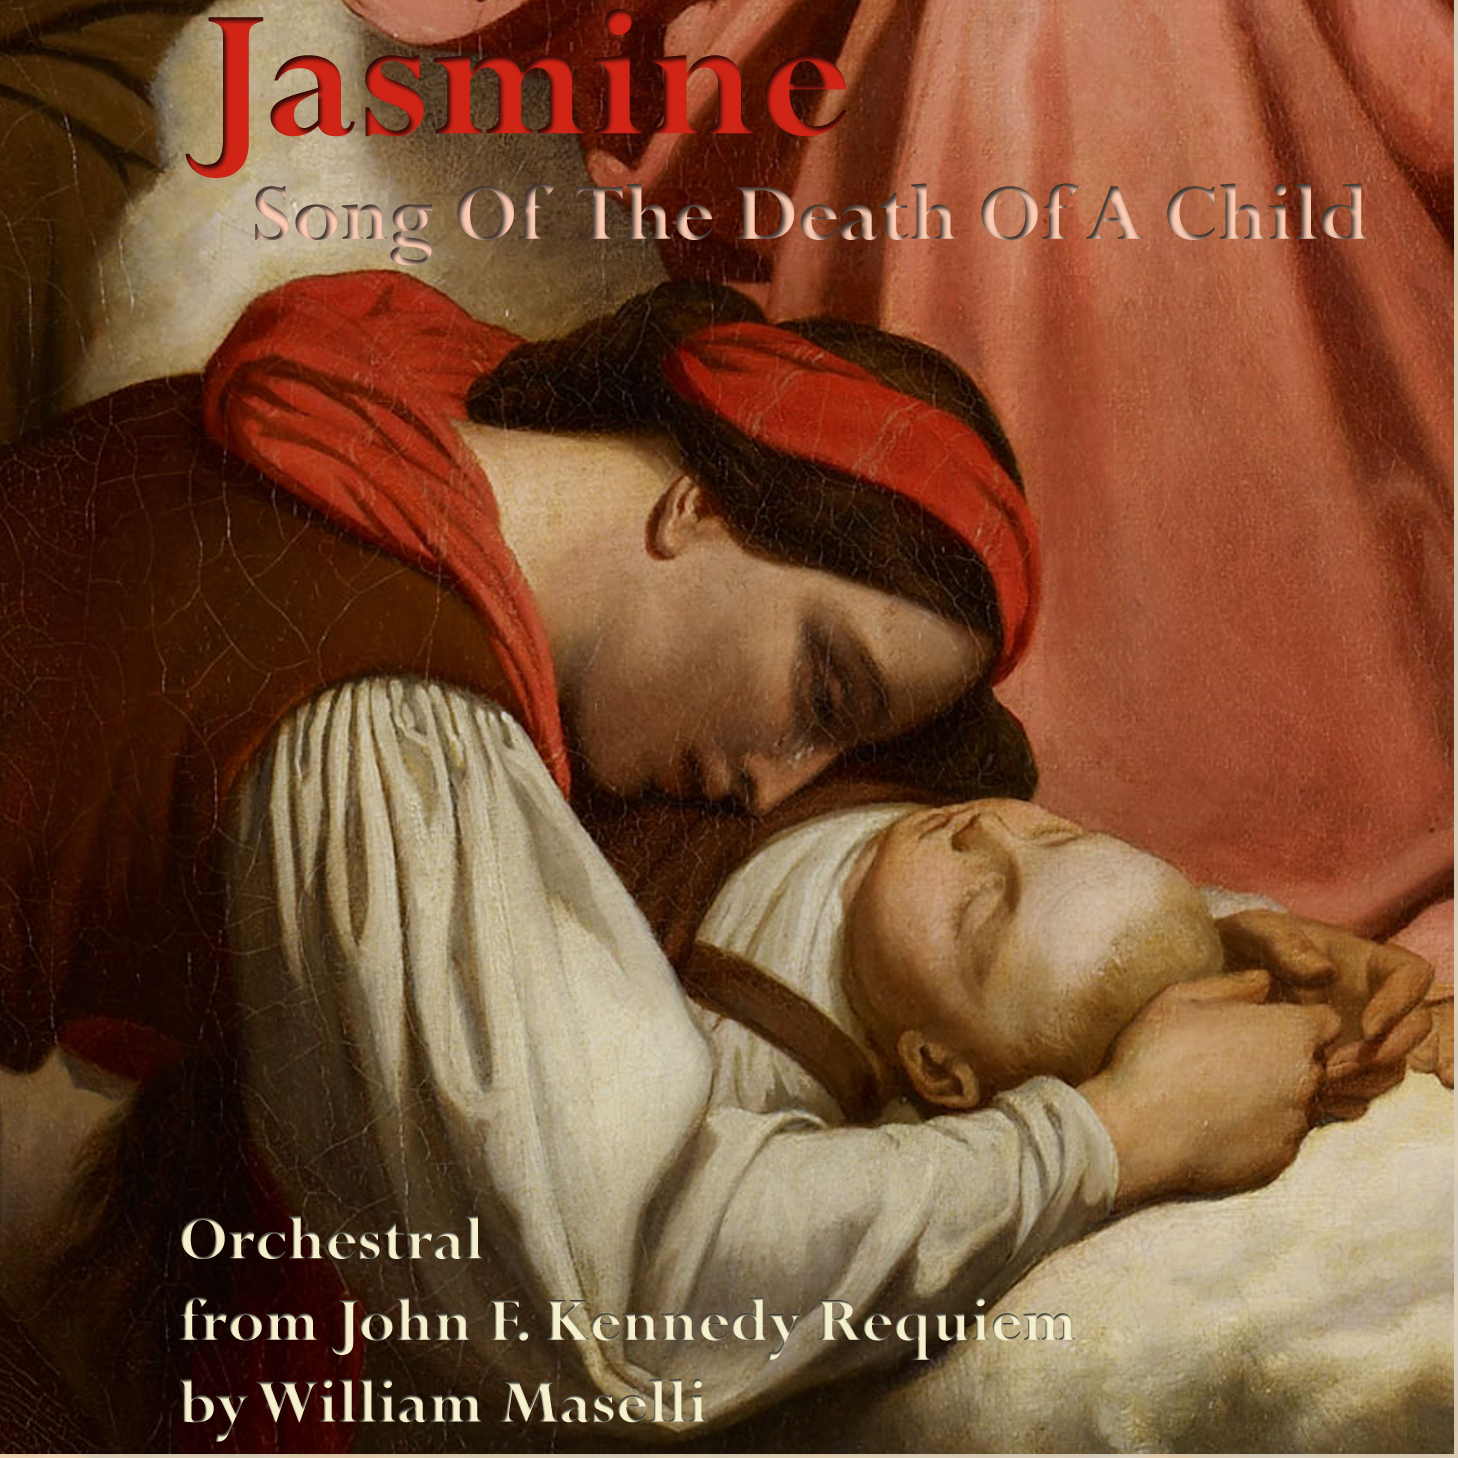 Jasmine from John F. Kennedy Requiem by William Maselli